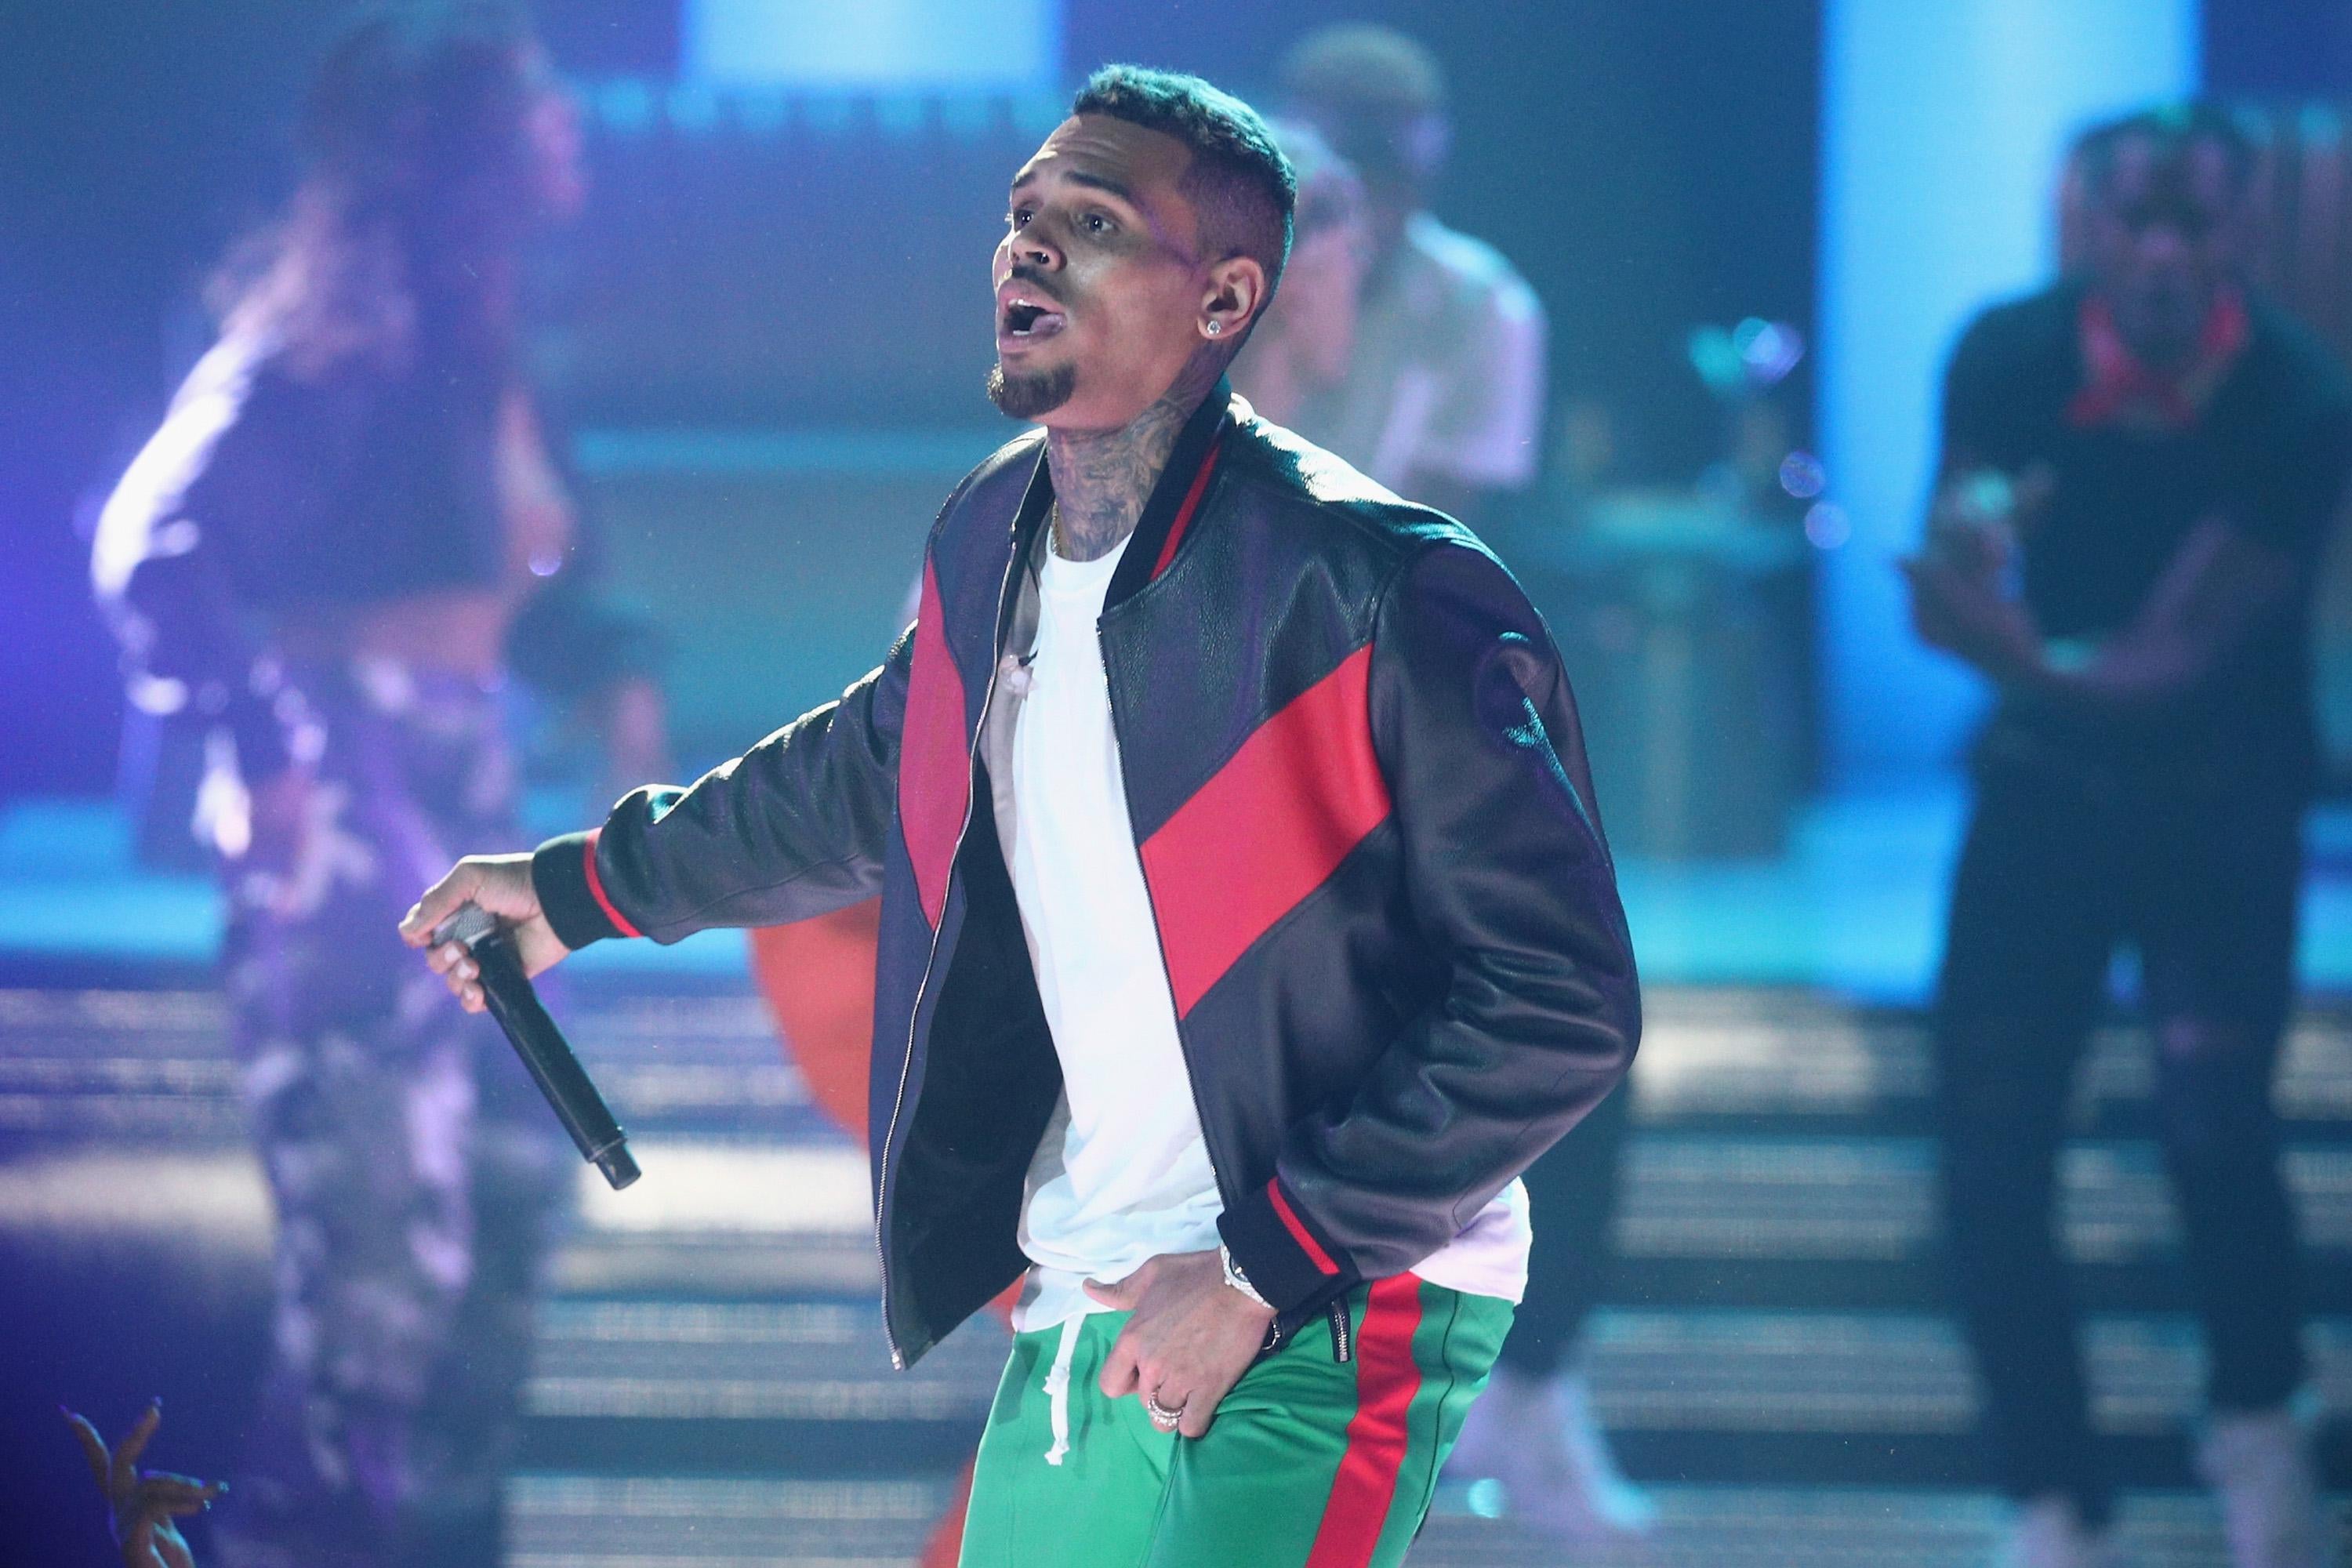 Chris Brown on stage.